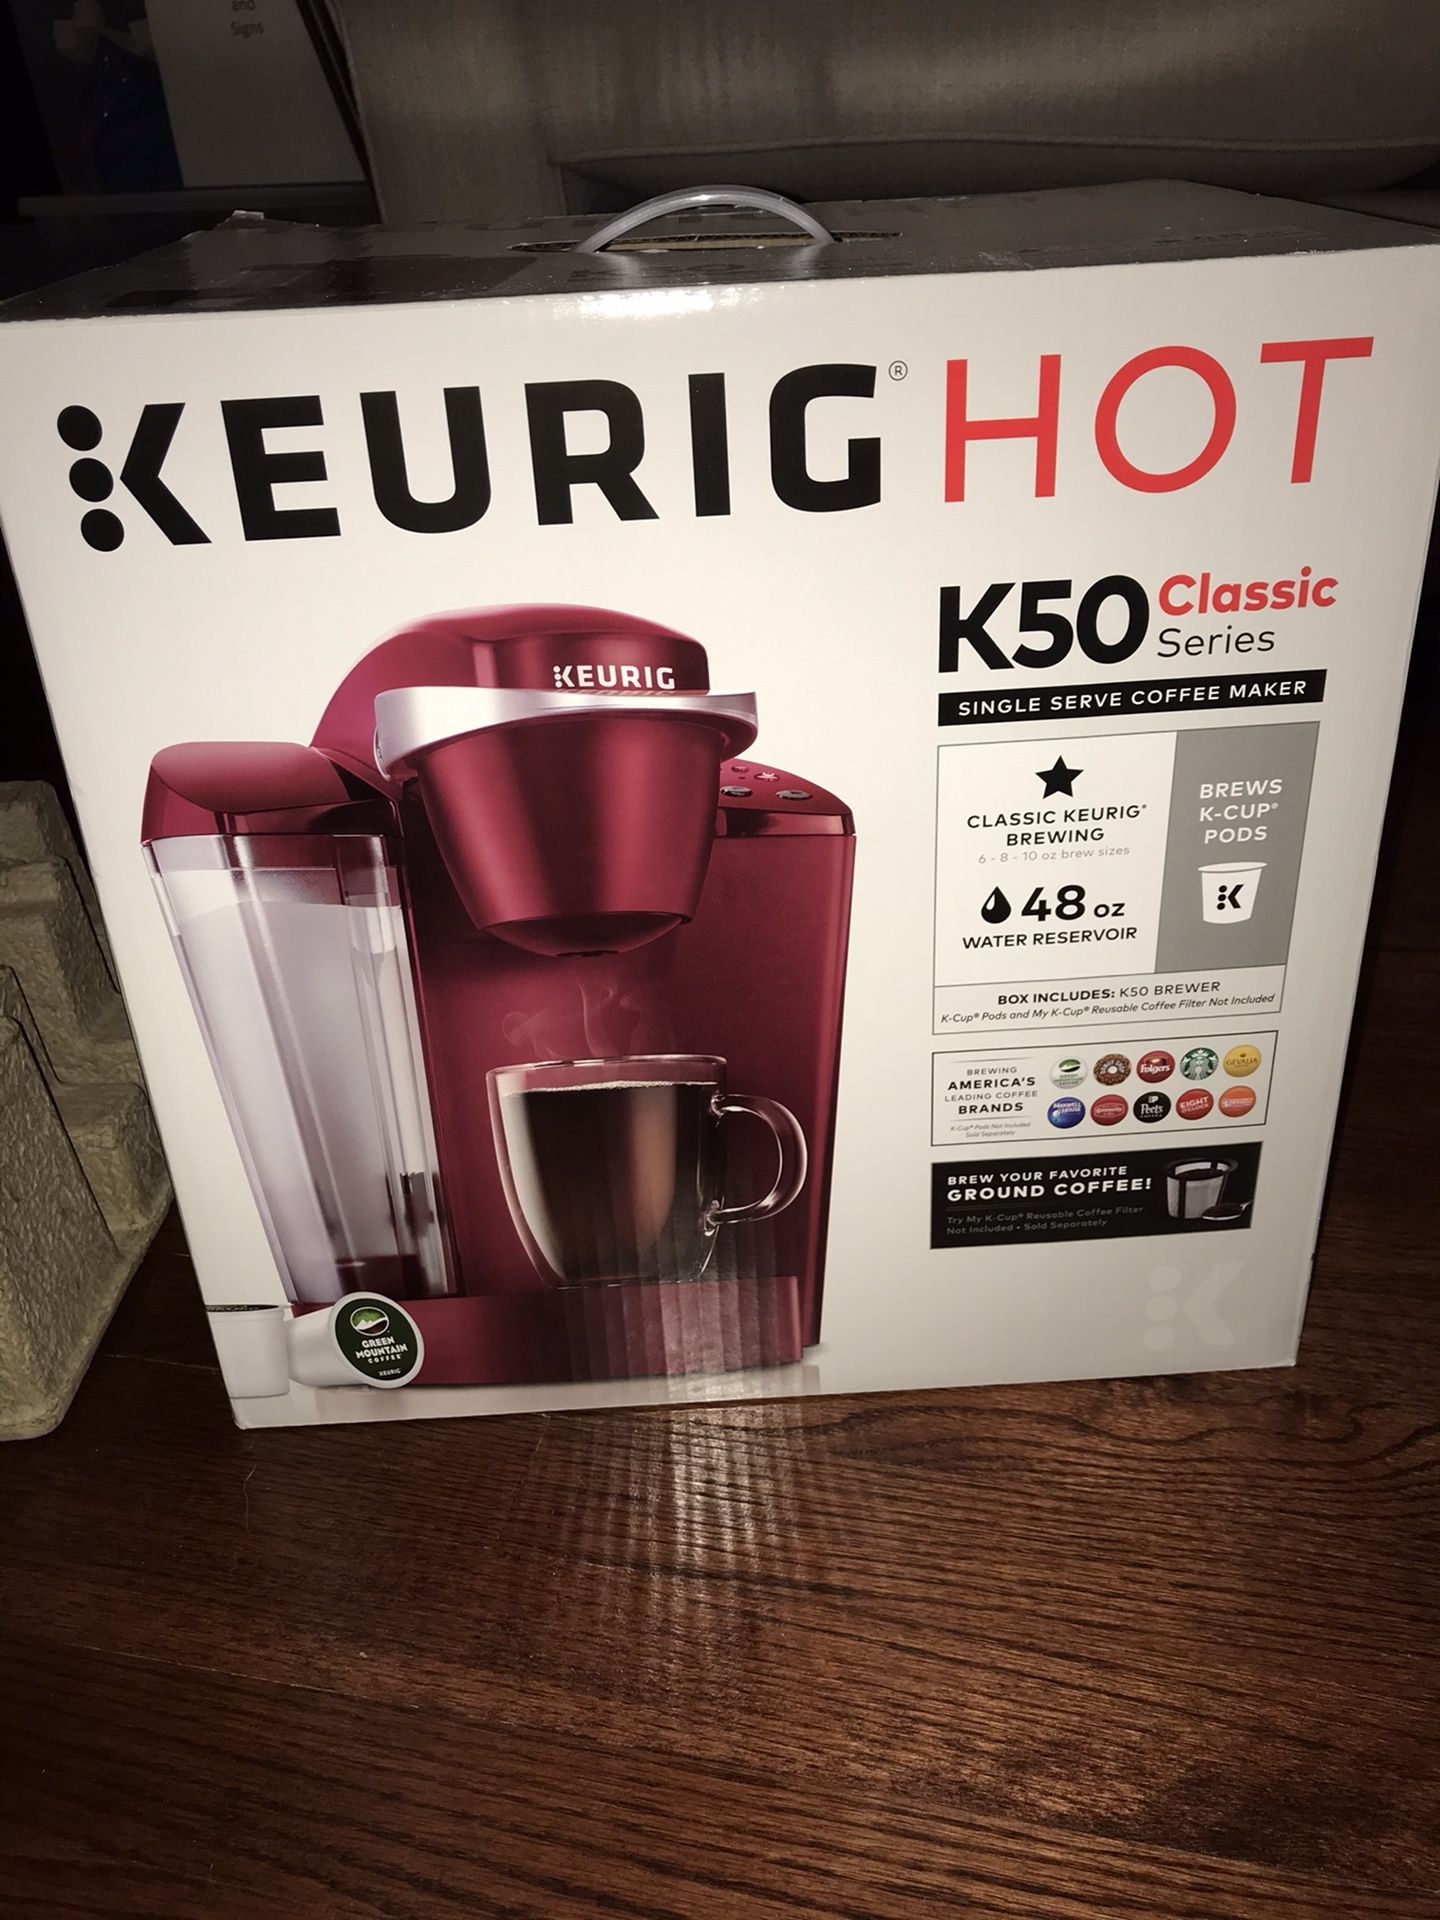 Keurig Hot K50 Classic Series Coffee Maker